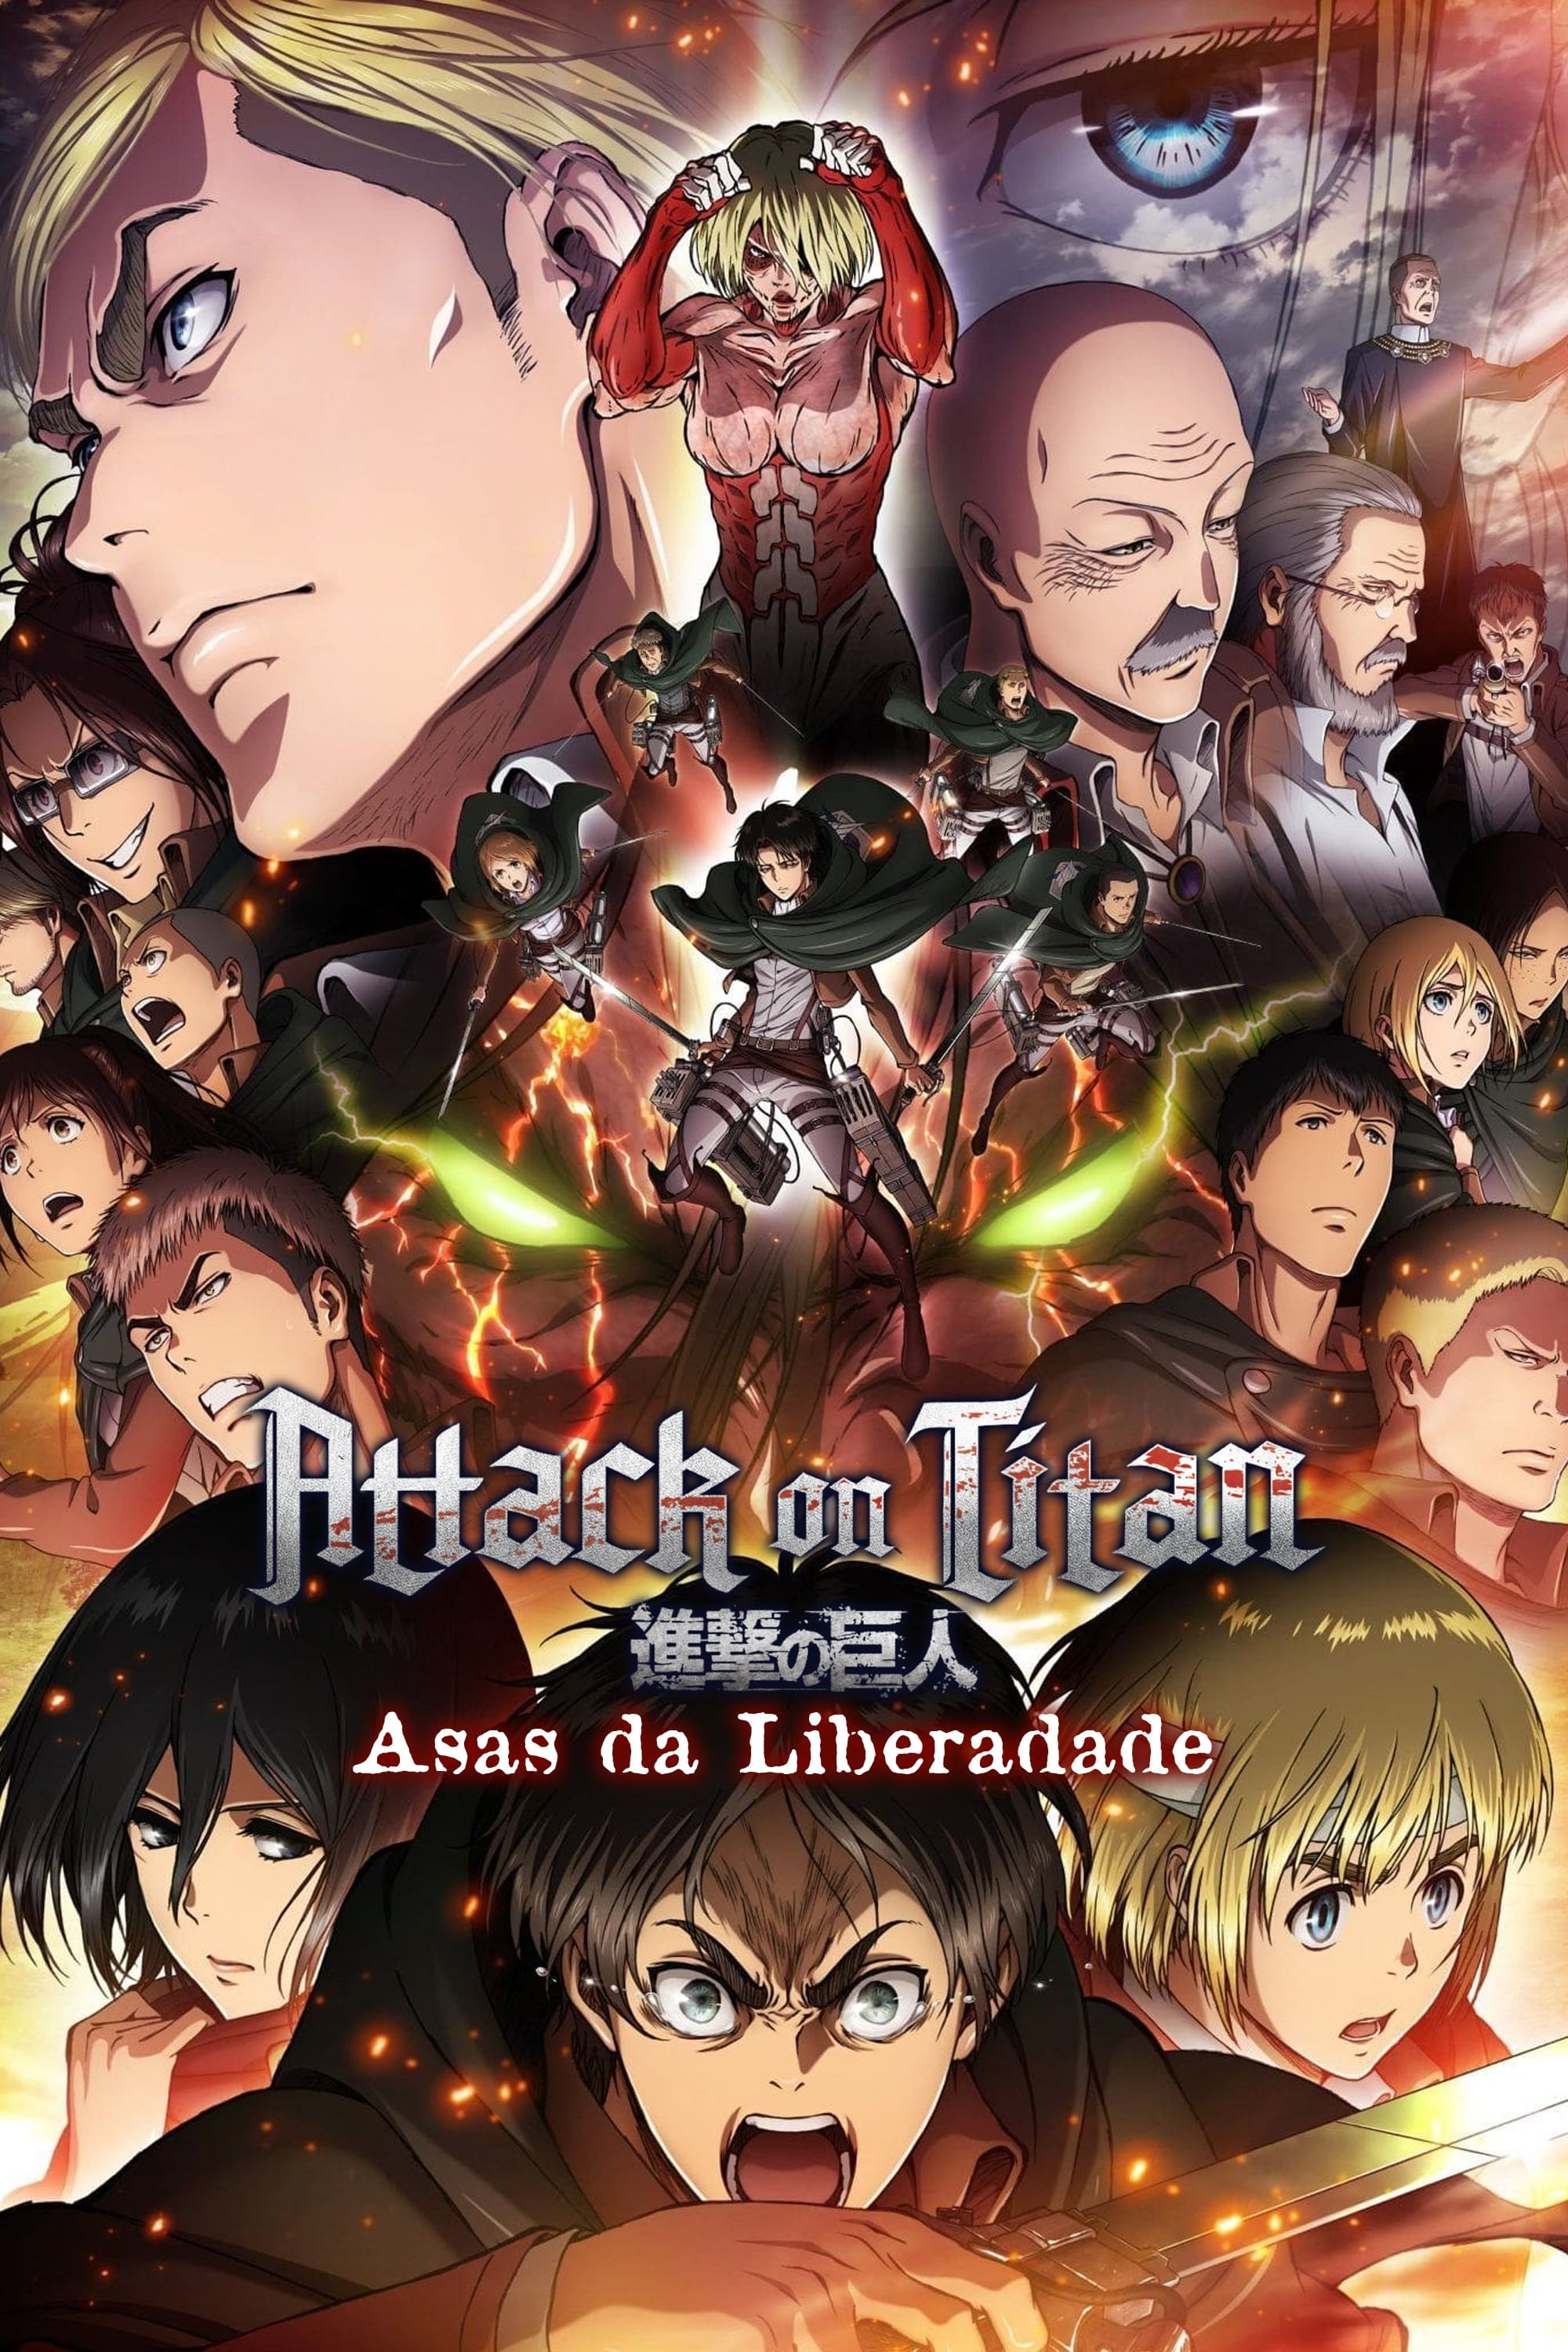 Attack On Titan (Shingeki no Kyojin), Collection, DVD, Dual Audio